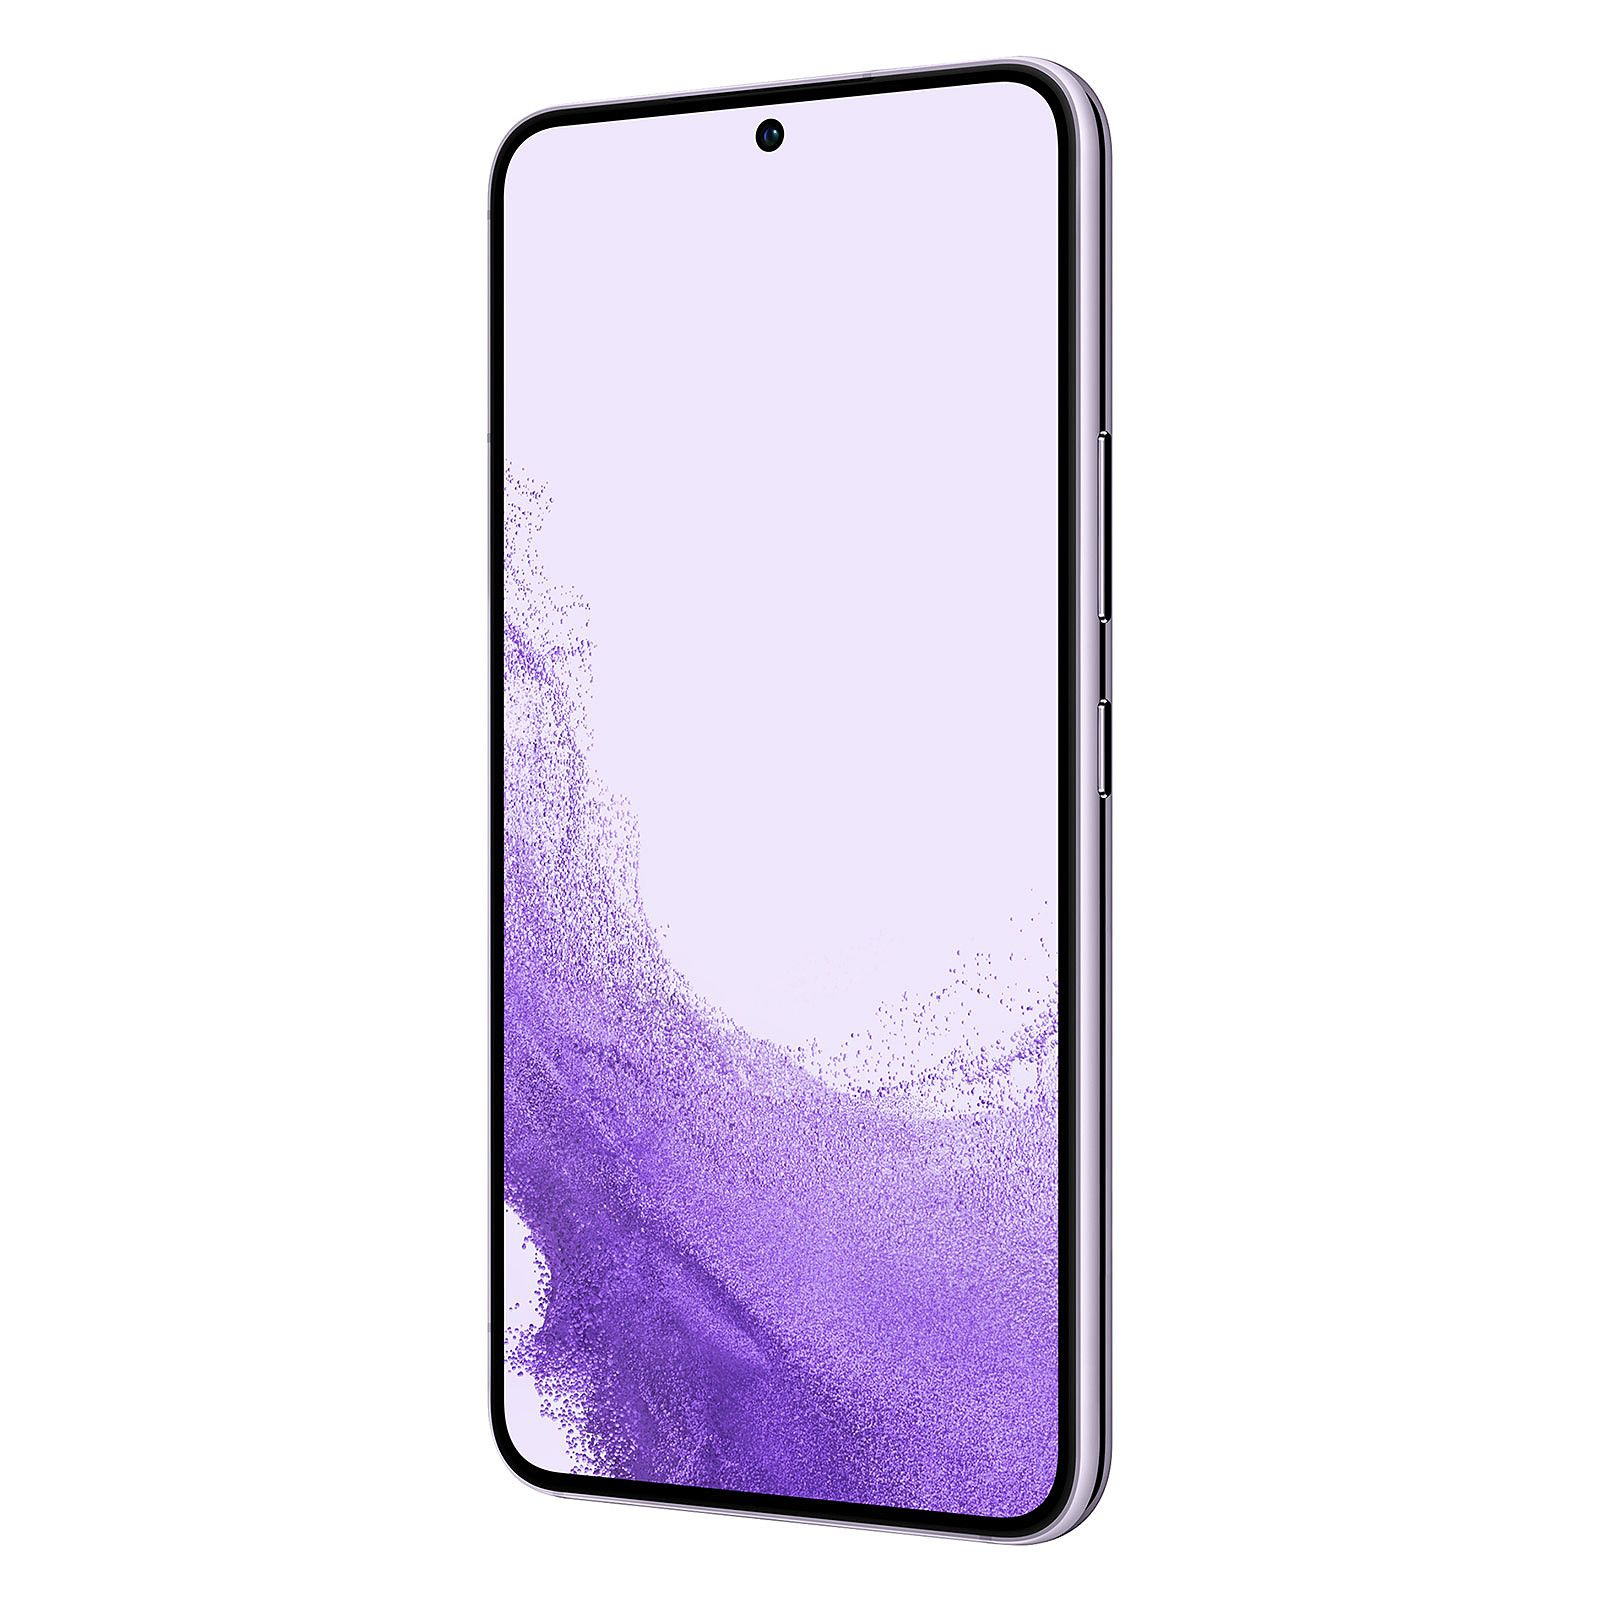 SAMSUNG 128 Galaxy GB SIM REFURBISHED S22 violett (*) Dual sim) (dual 128 GB